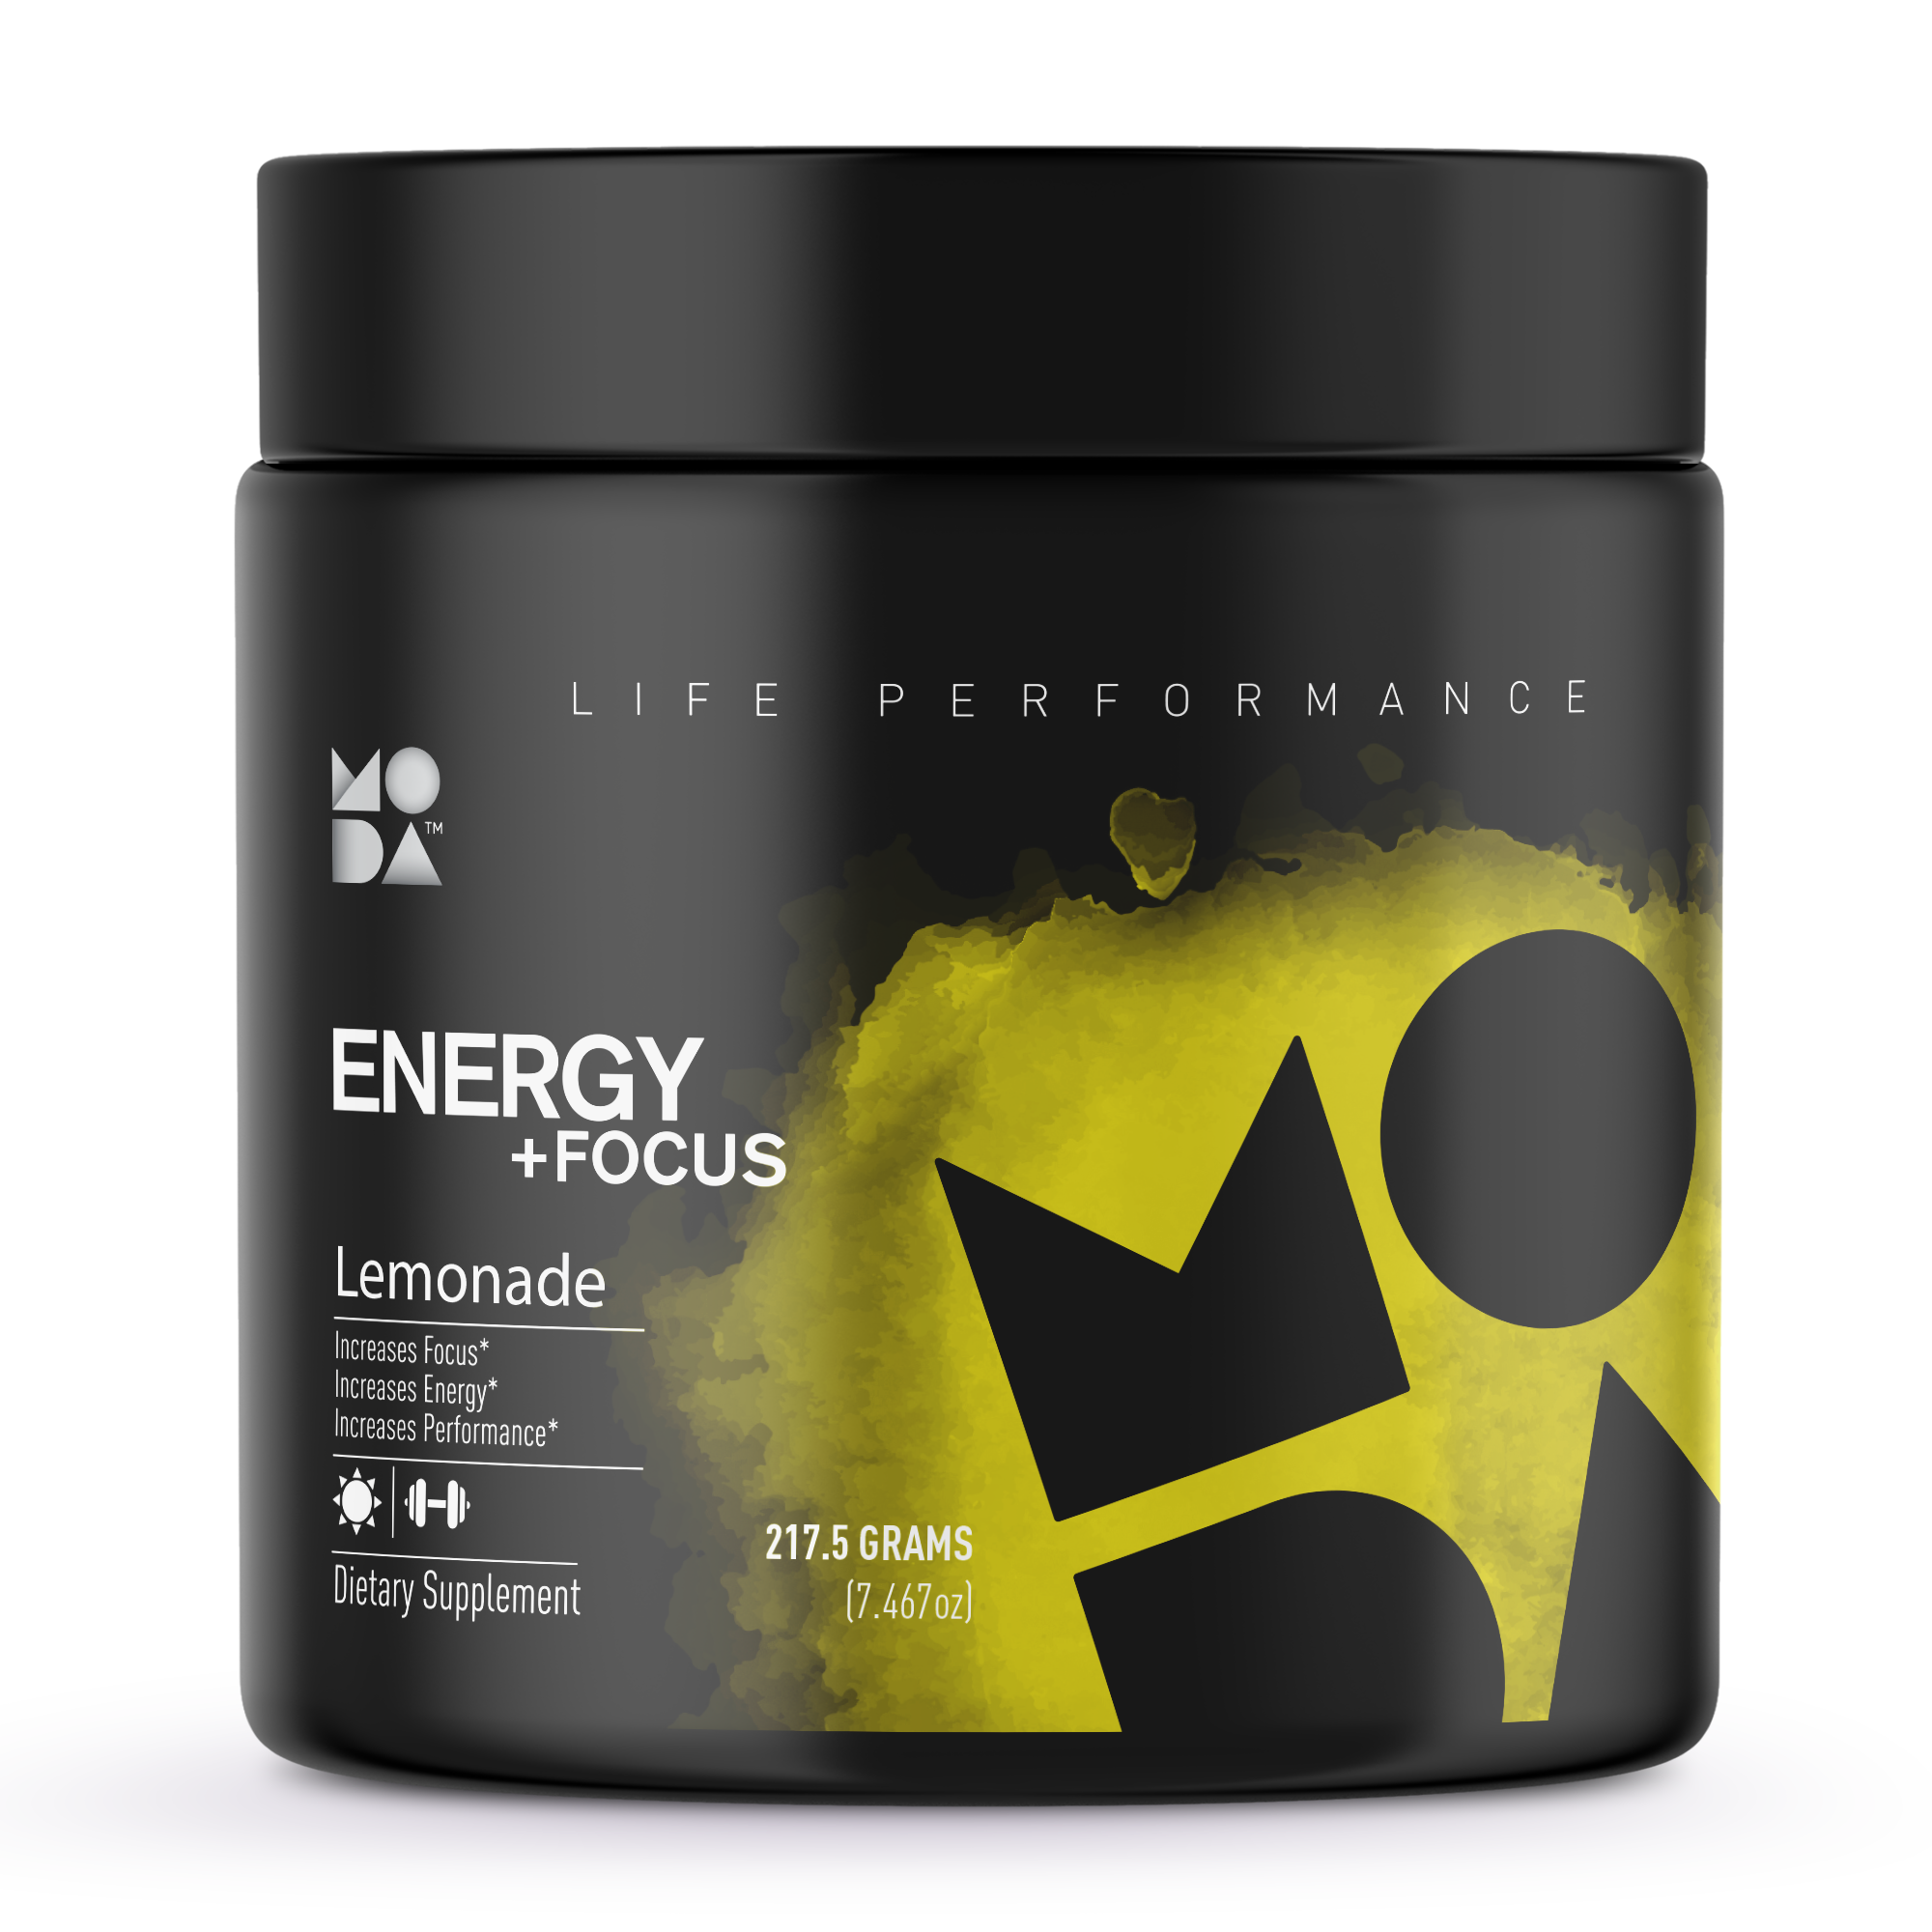 ENERGY + FOCUS (Lemonade)